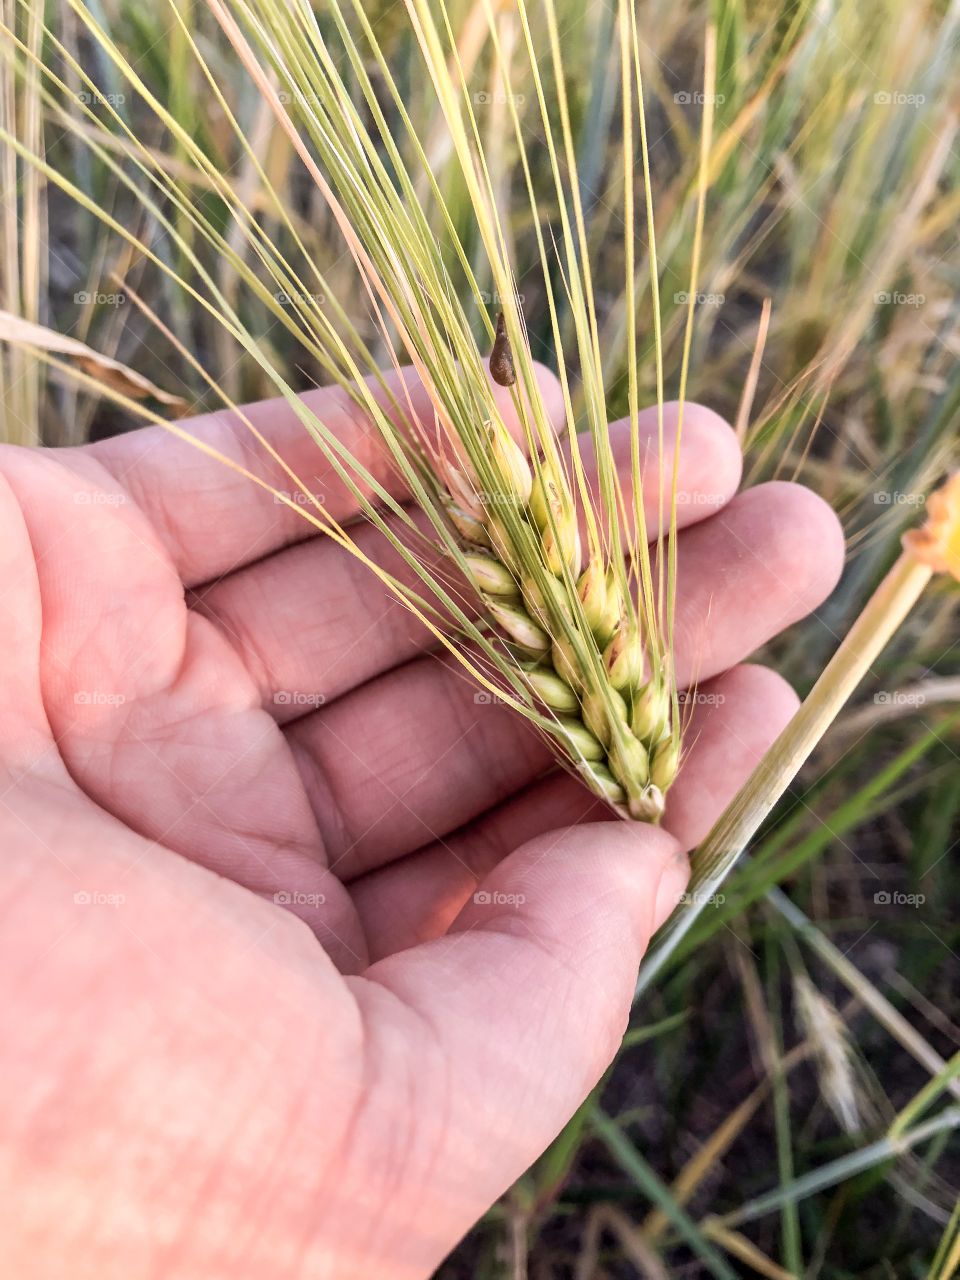 A hand holding wheat grain 